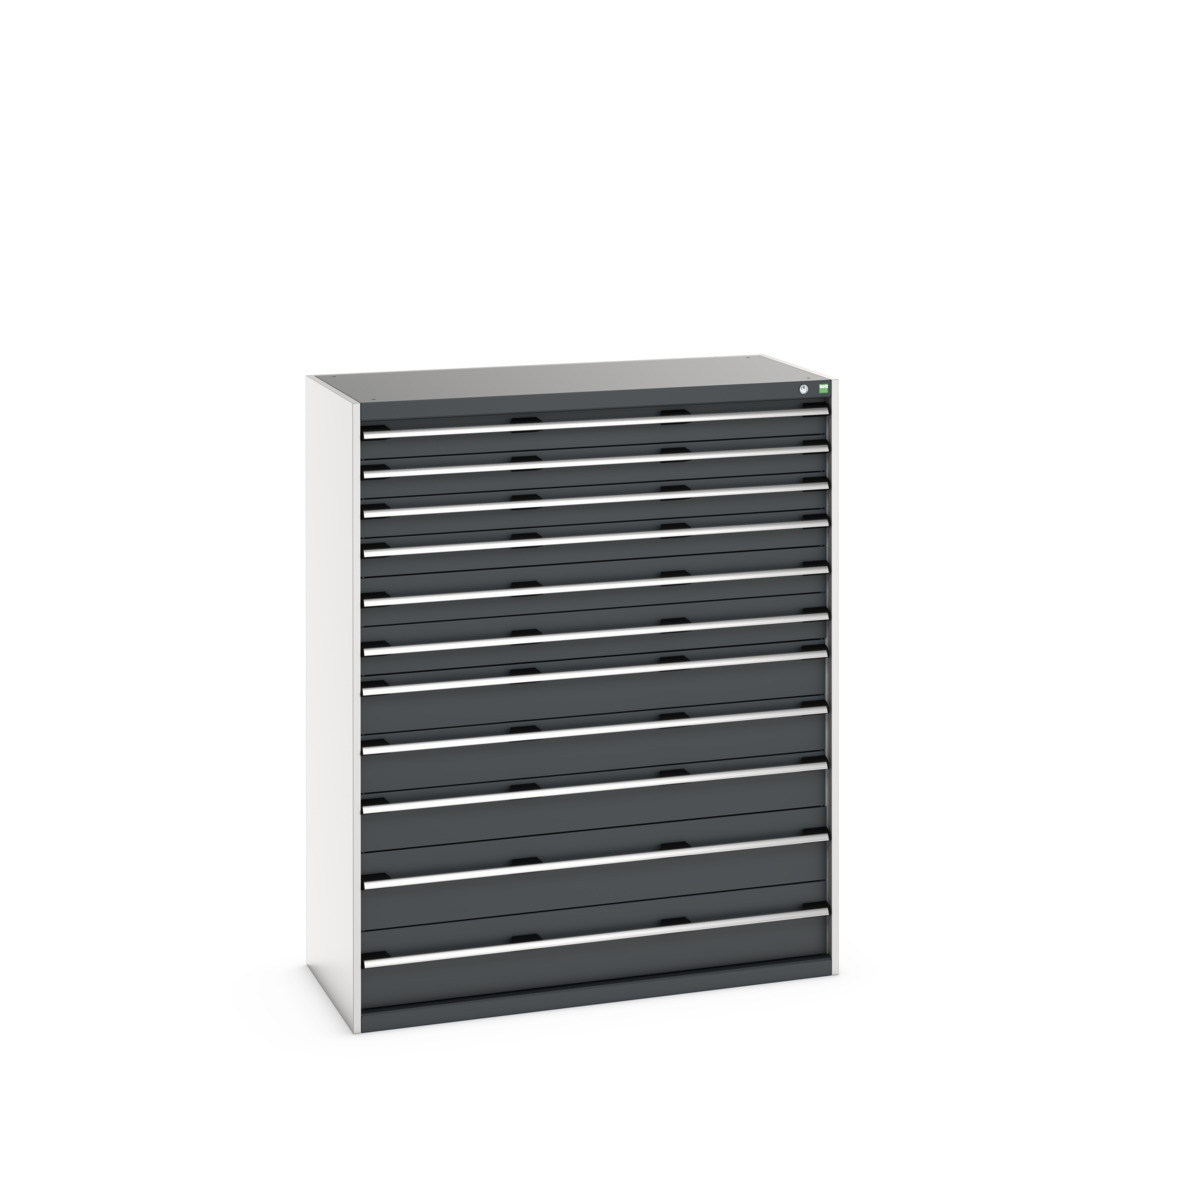 40022136. - cubio drawer cabinet